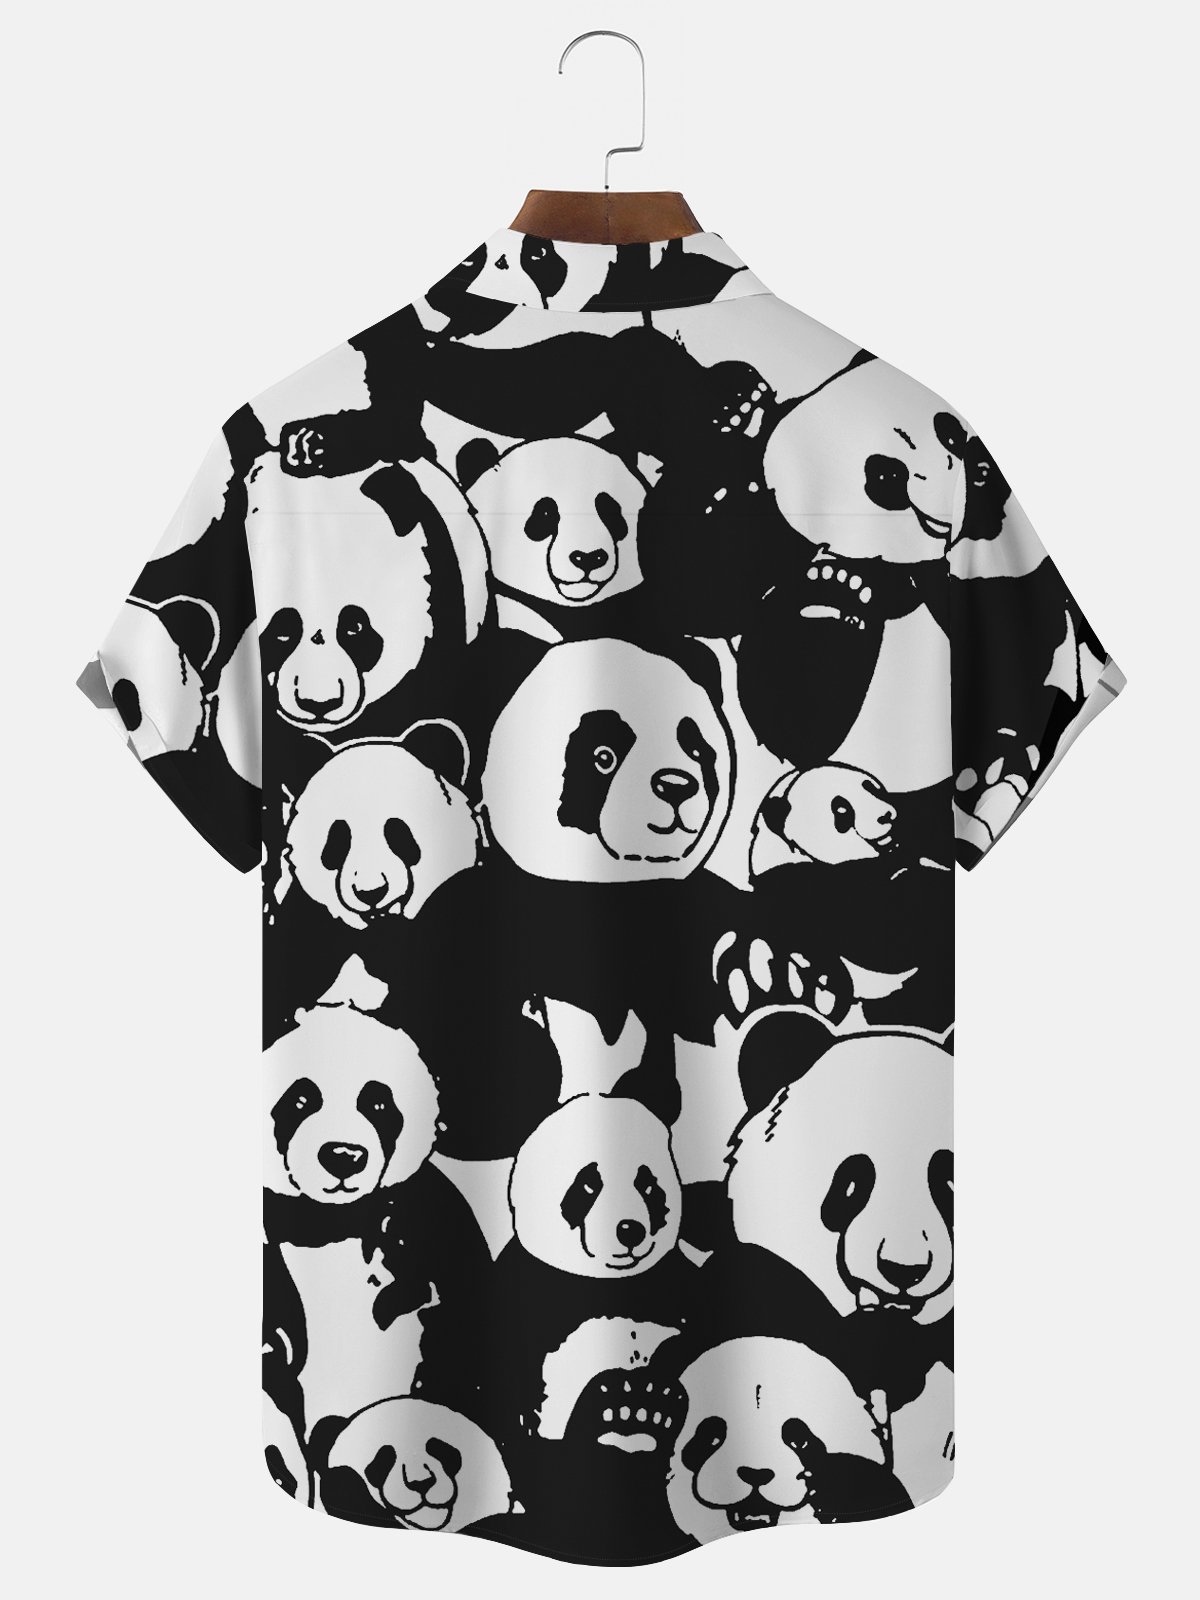 Royaura Beach Holiday Black Panda Men's Hawaiian Shirts Stretch Plus Size Aloha Camp Pocket Animal Shirts